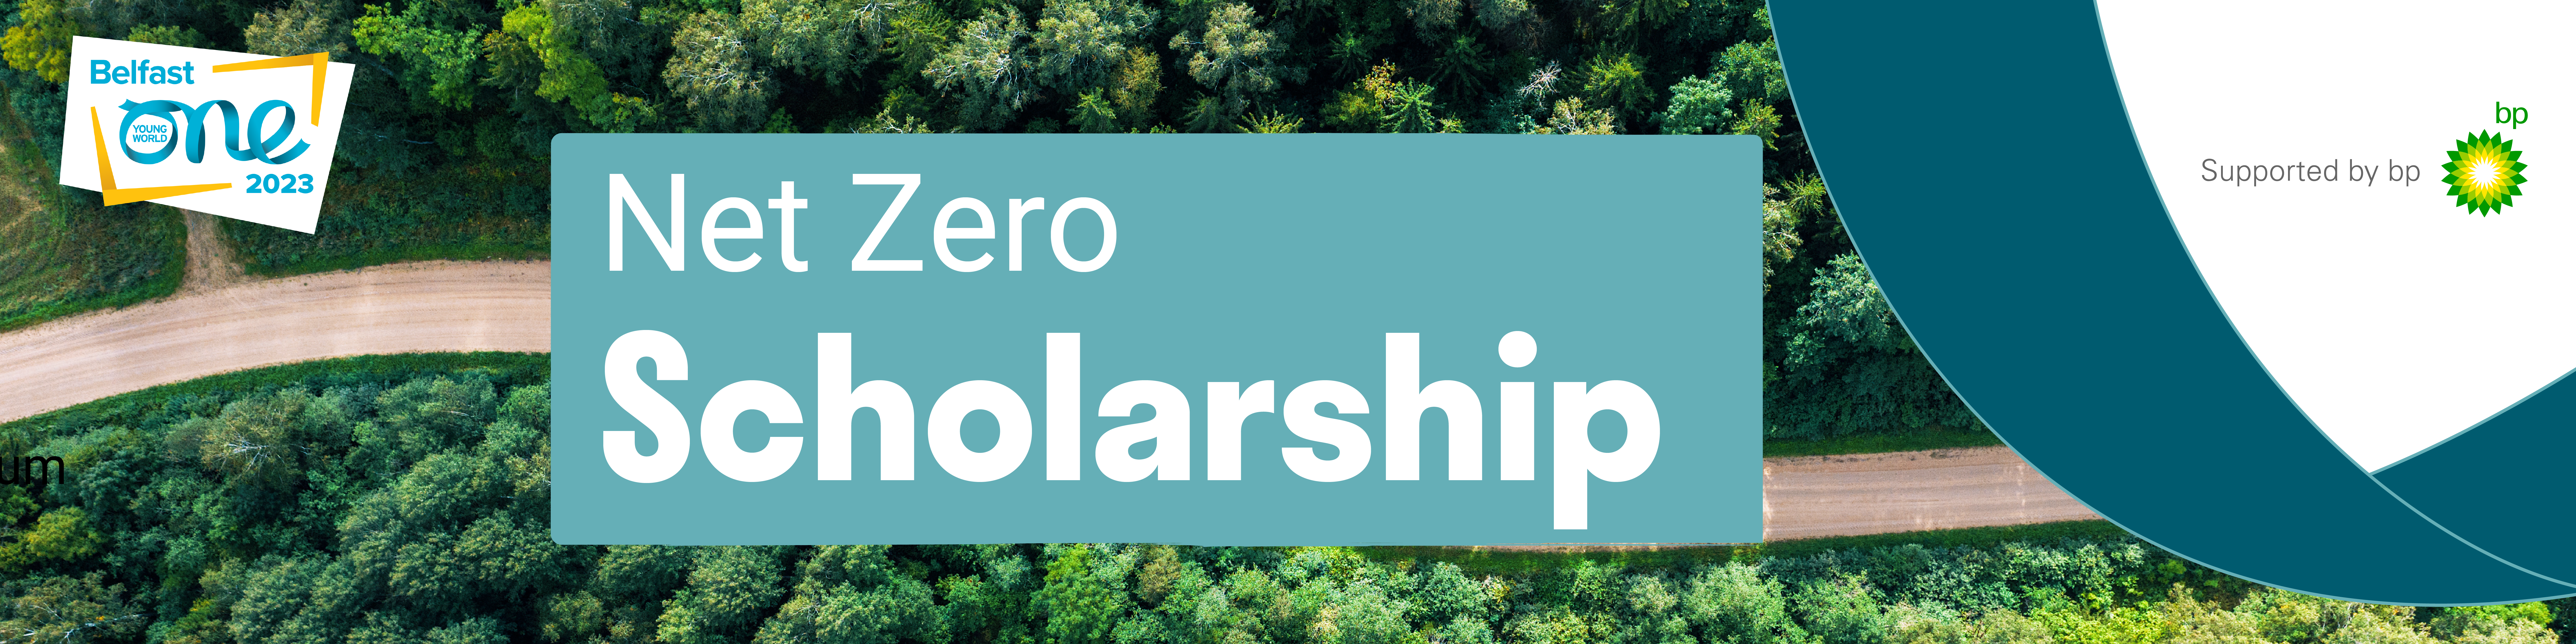 bp Net Zero Scholarship 2023